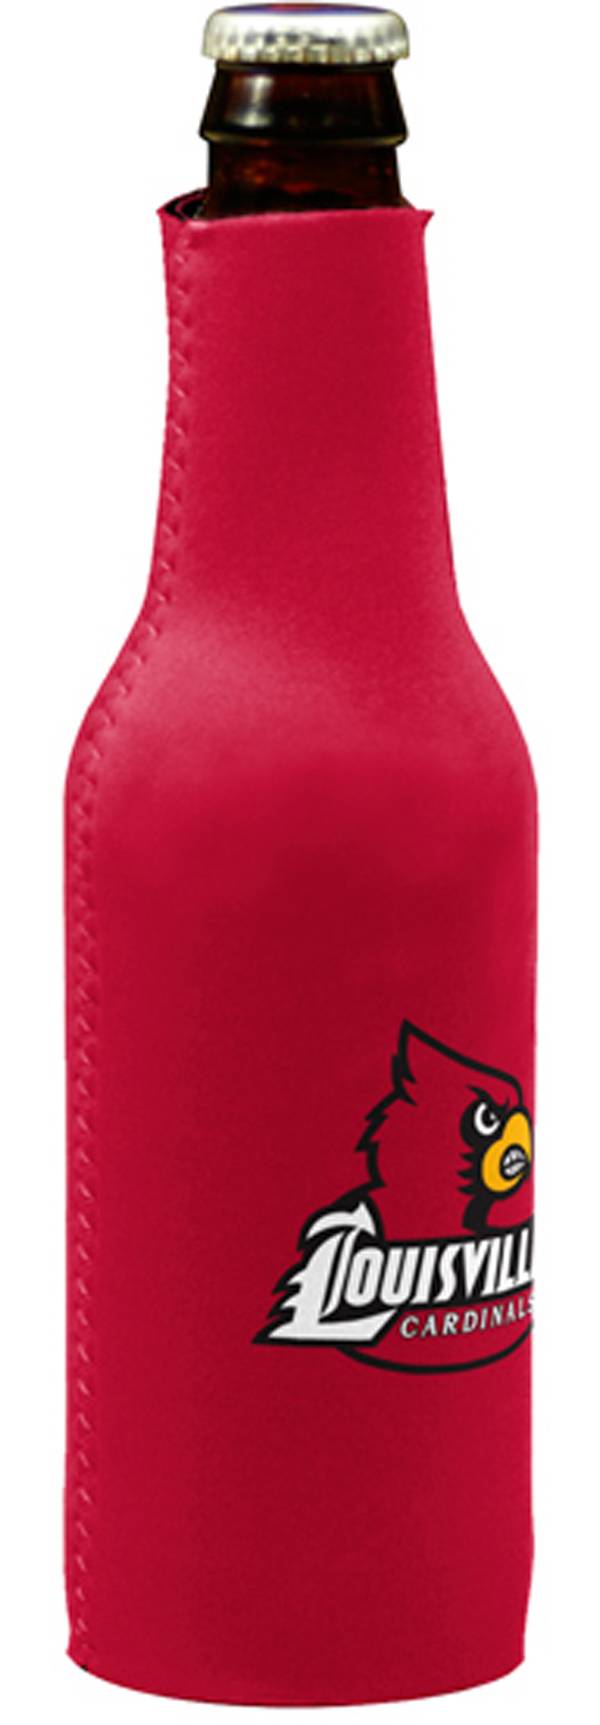 Louisville Cardinals UofL PINK Drink Koozie Beer Can or Bottle